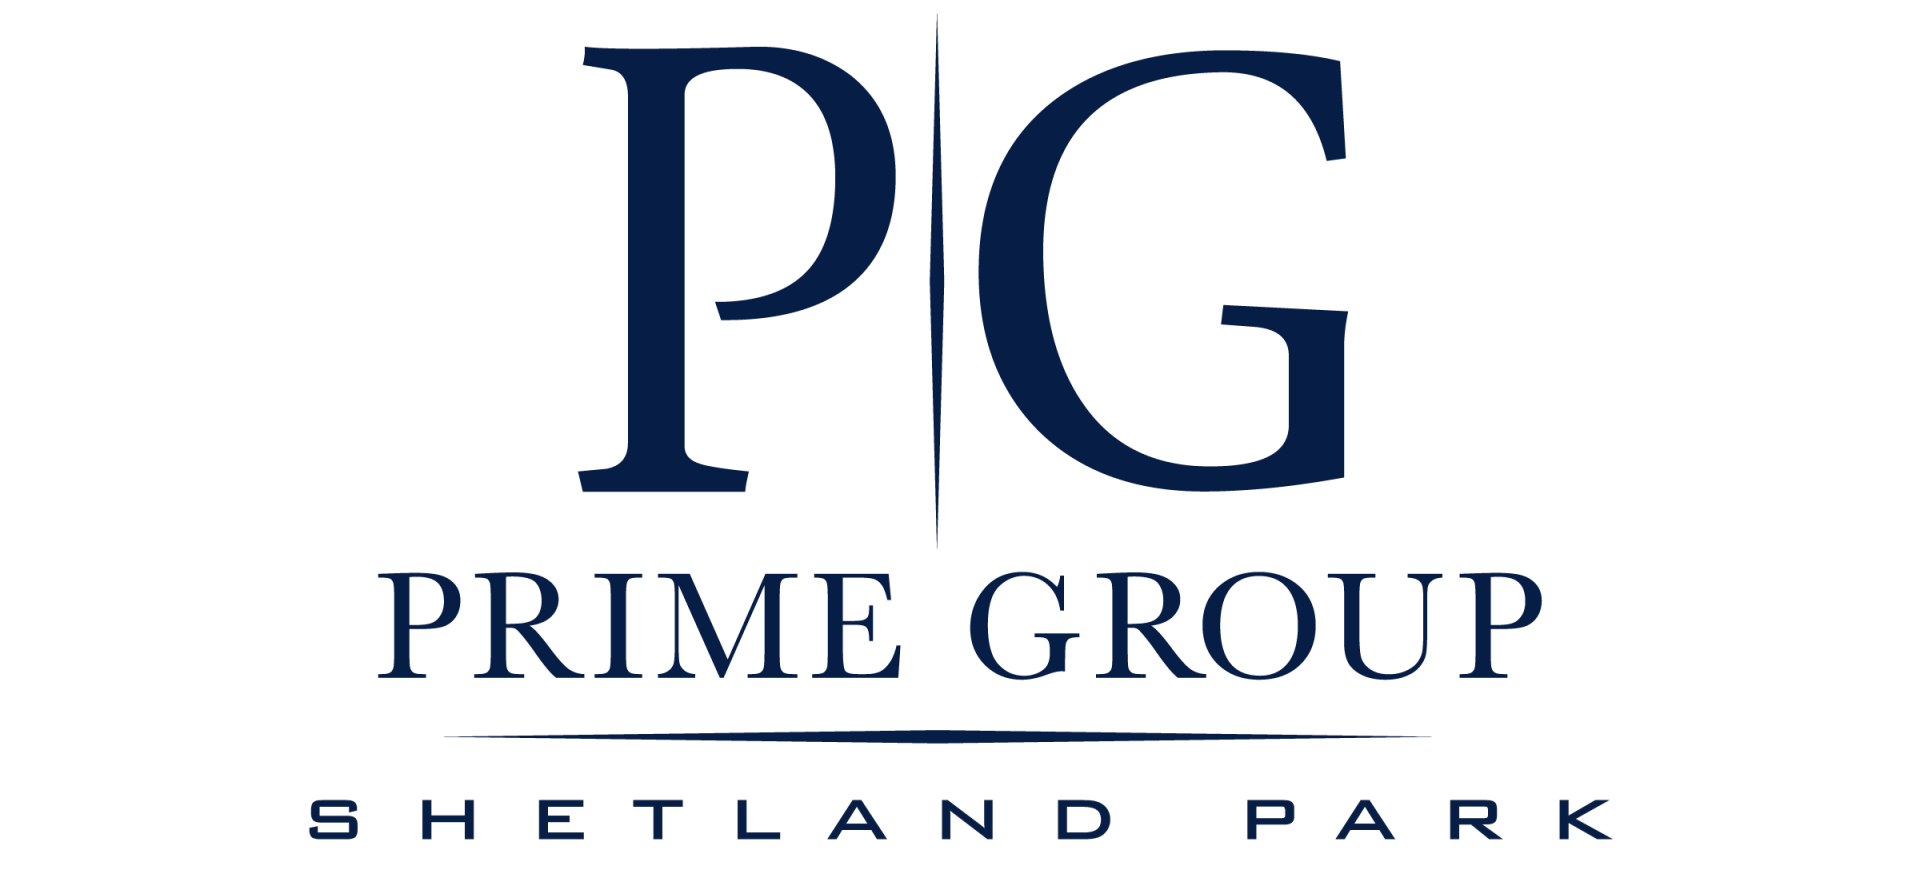 Prime Group - Shetland Park